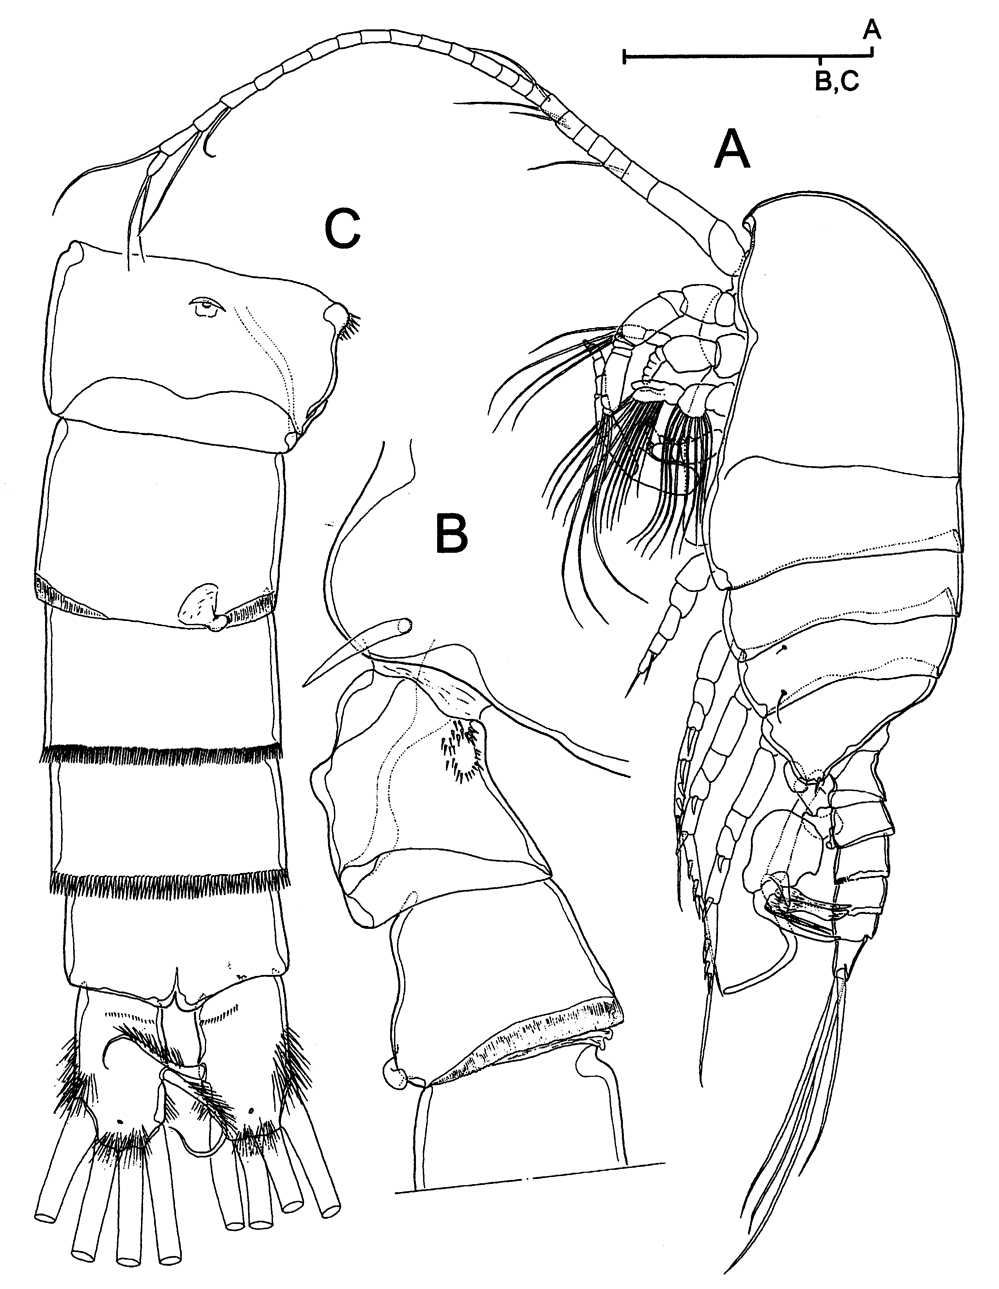 Species Stephos margalefi - Plate 5 of morphological figures